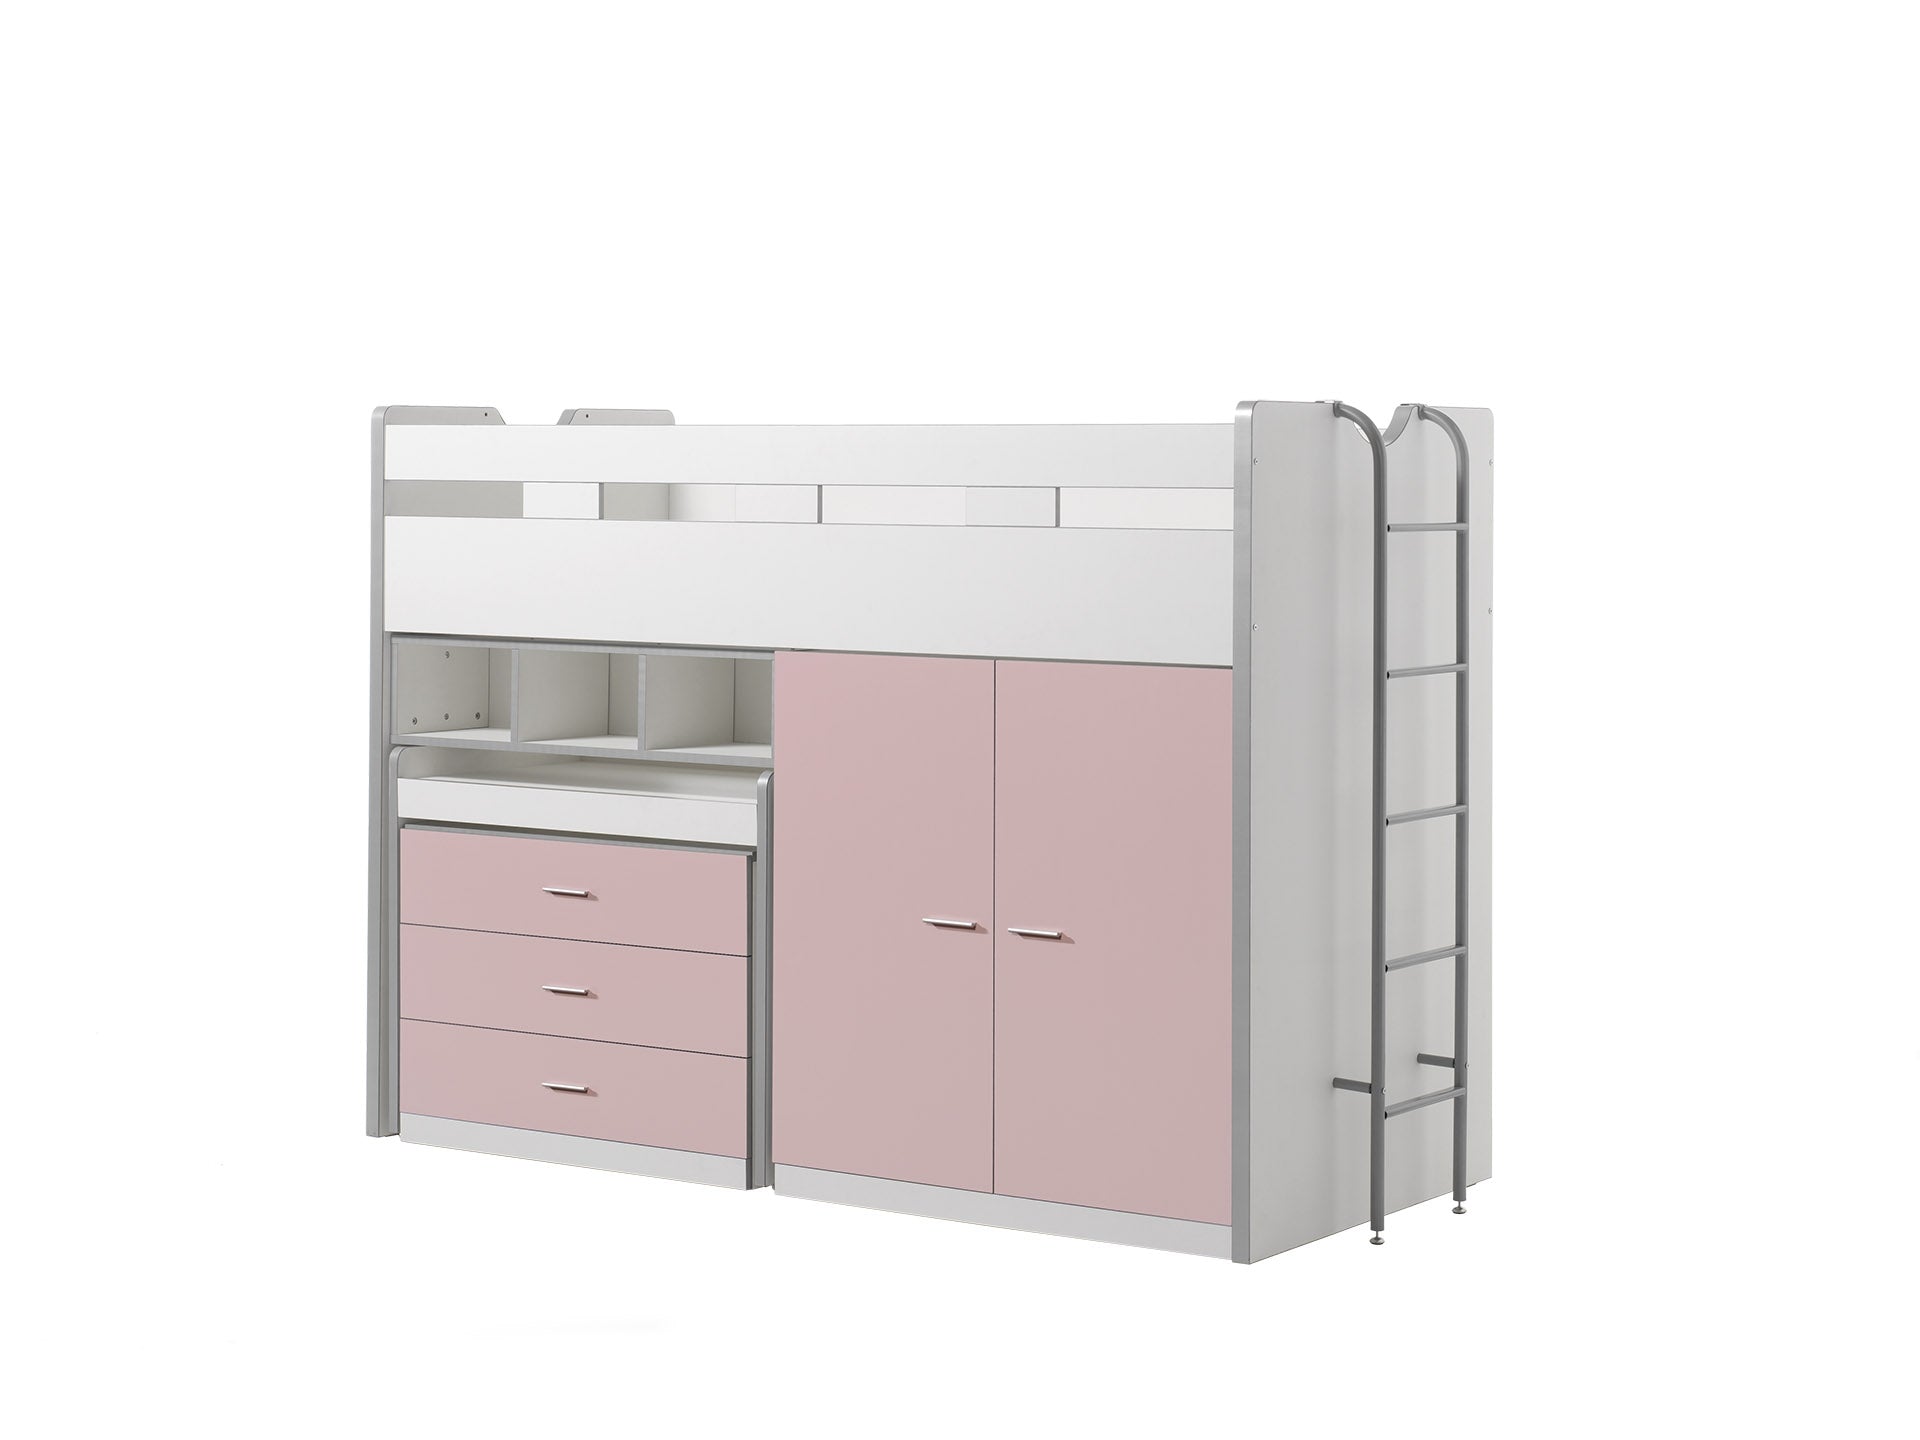 Pat etajat din pal si metal cu birou incorporat, 3 sertare si dulap, pentru copii Bonny High Alb / Roz, 200 x 90 cm (1)